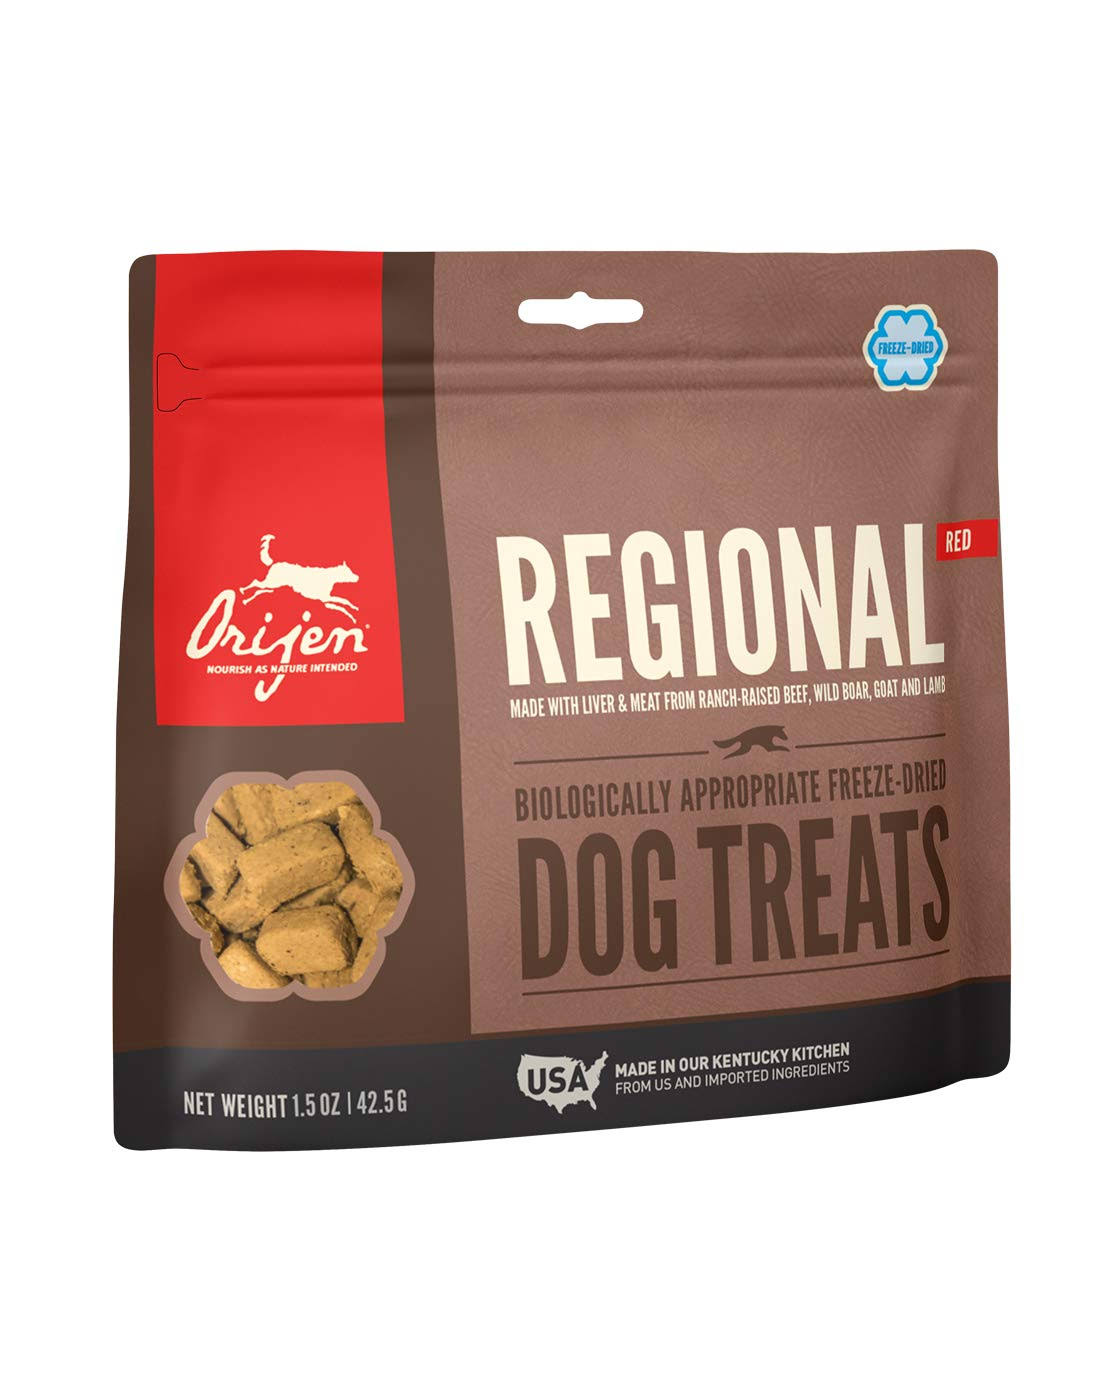 Orijen Freeze Dried Regional Red Dog Treat | Dogs